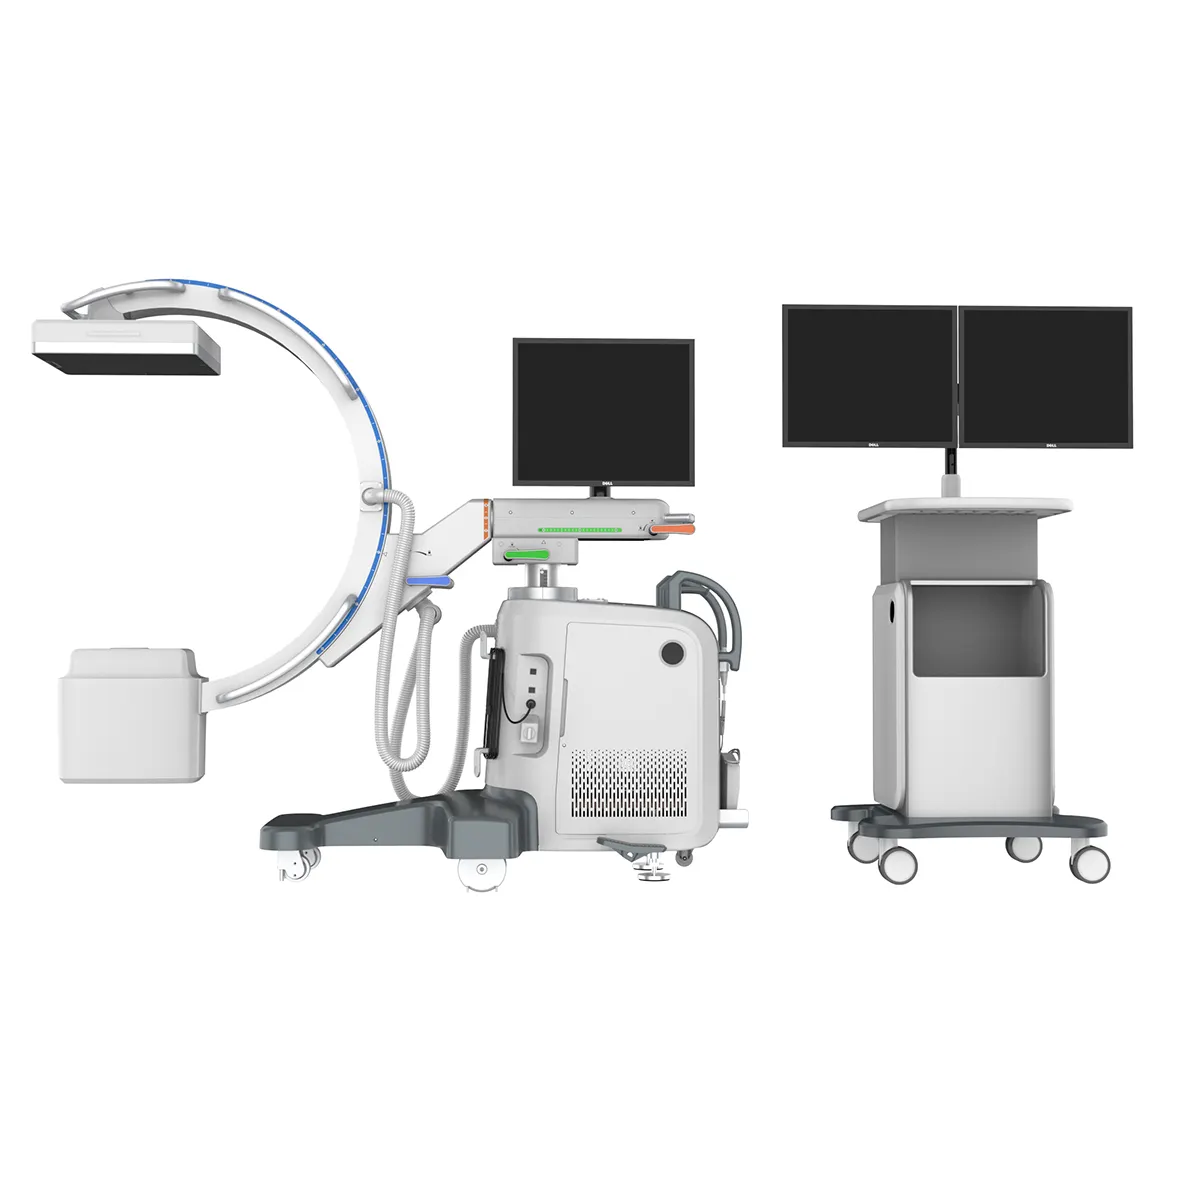 Digitaler mobiler C-Arm-Röntgengerät Flach bild detektor, C-Arm-Röntgengerät digitales Fluor os kopie gerät mit Arbeitsplatz